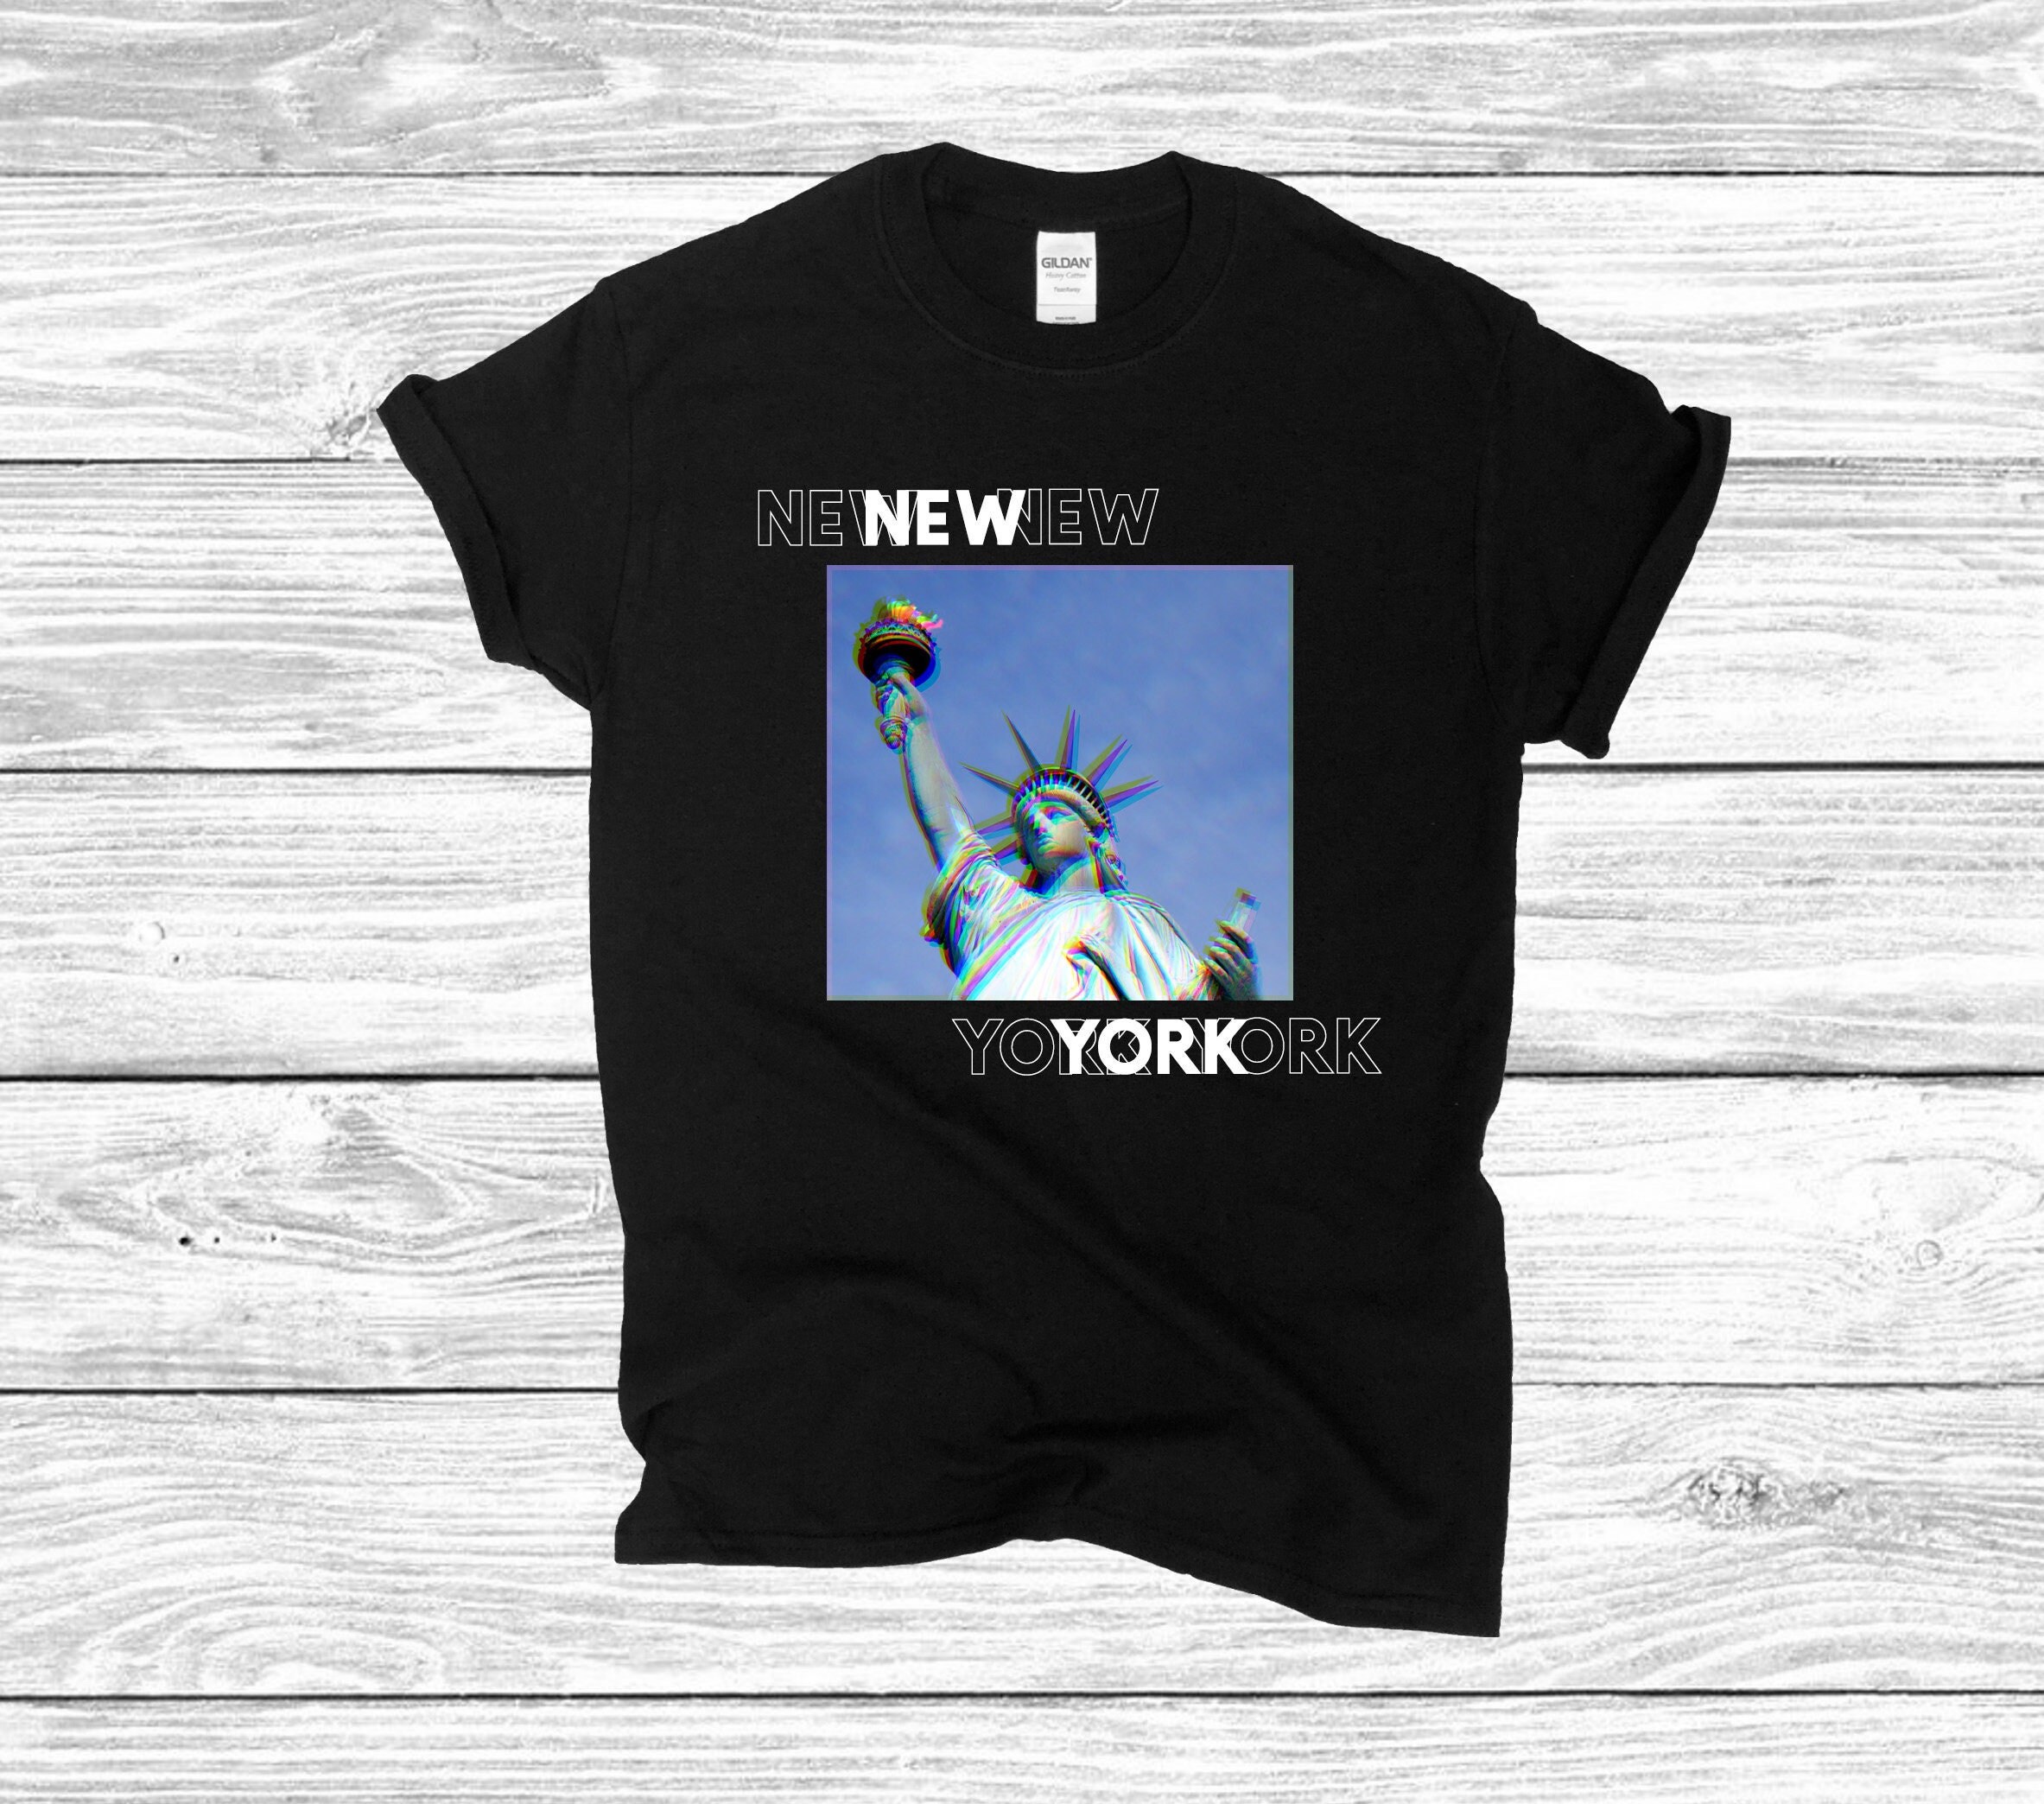 Discover N€W York, N€W Yorker T-Shirt